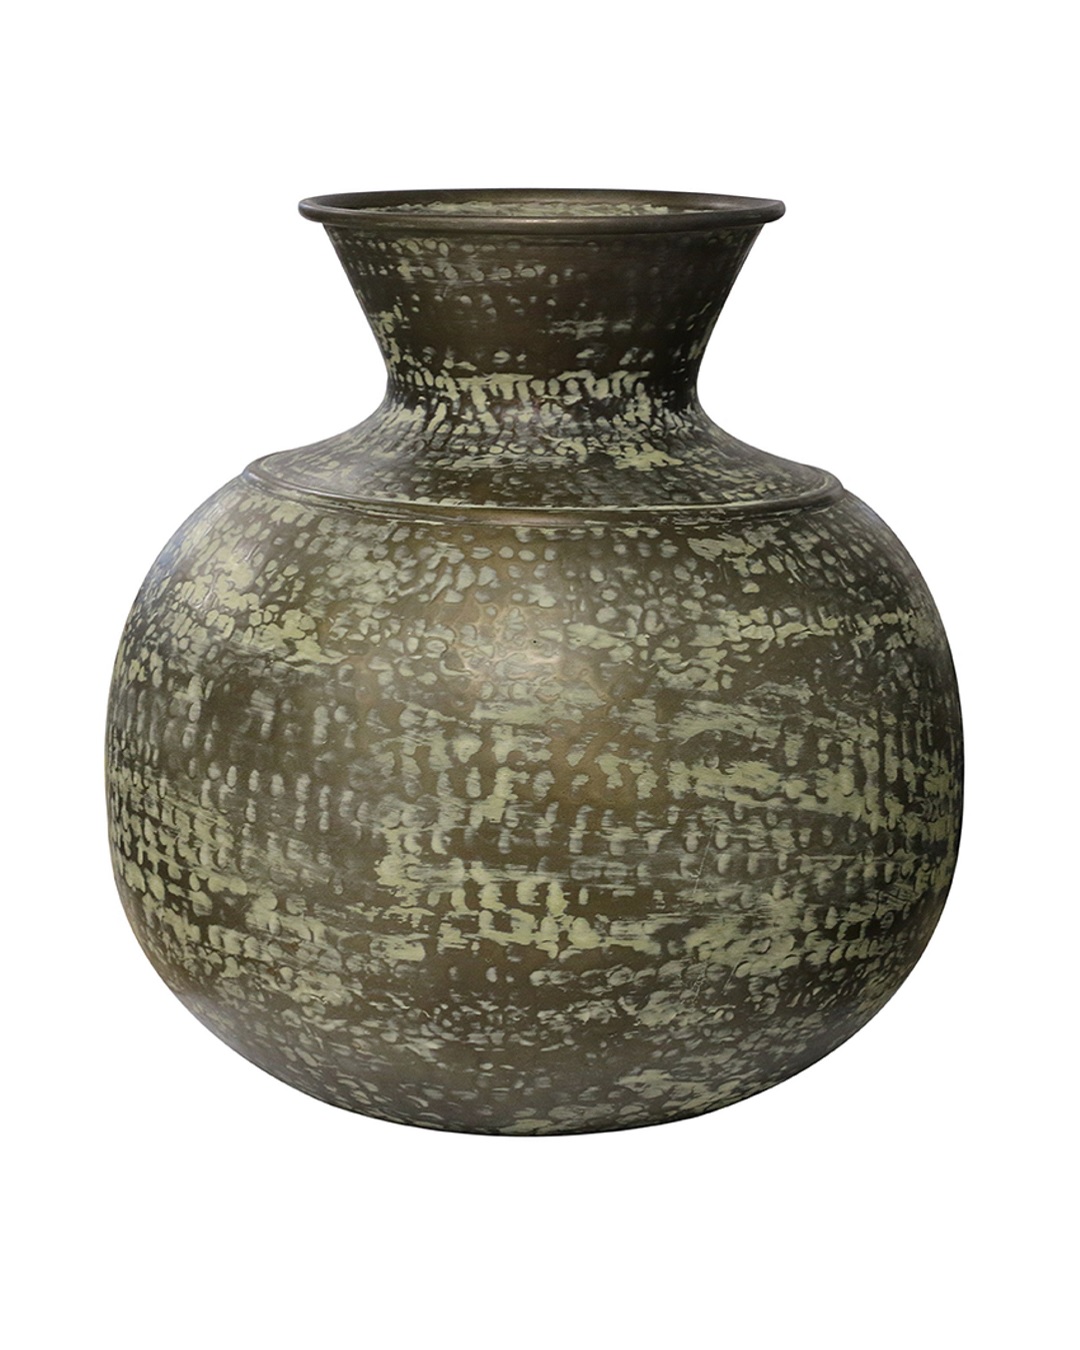 Catalonia large pot in antique finish